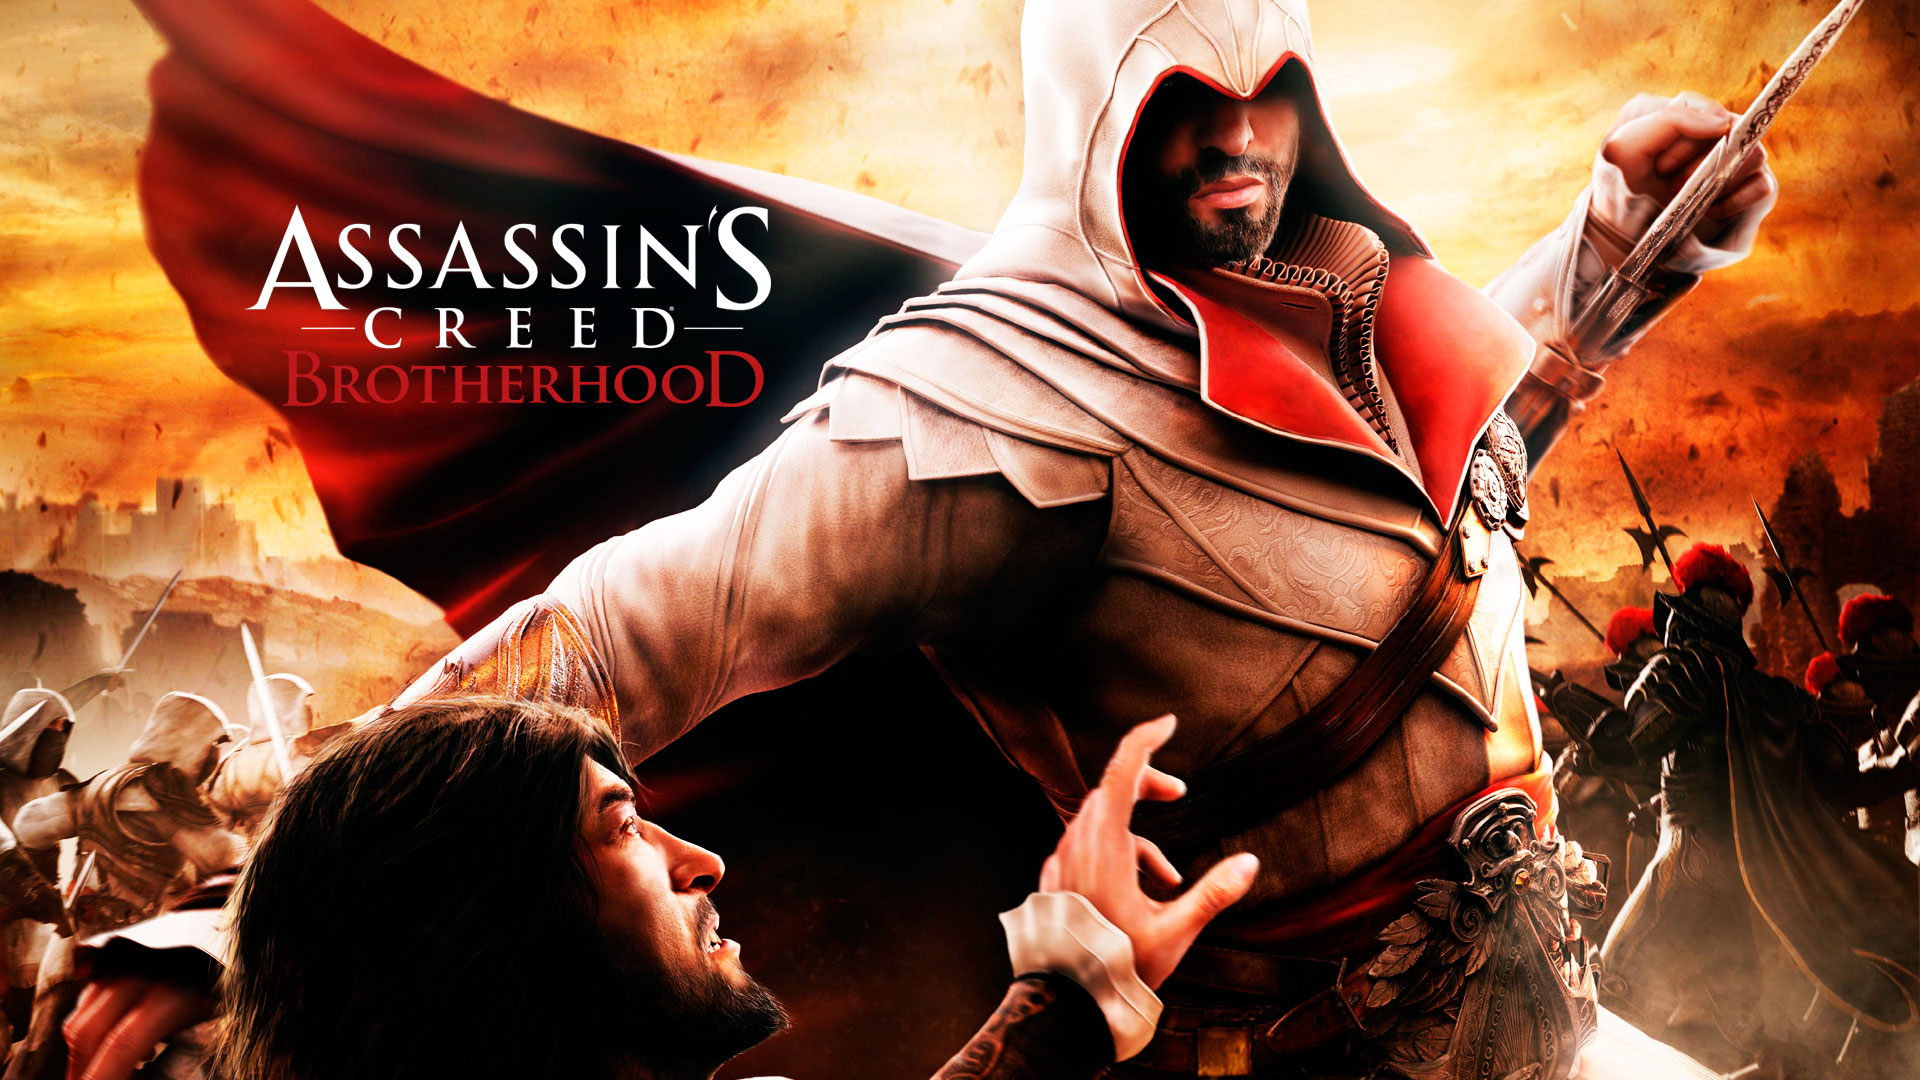 Brotherhood 1080p Wallpaper Assassins Creed 720p